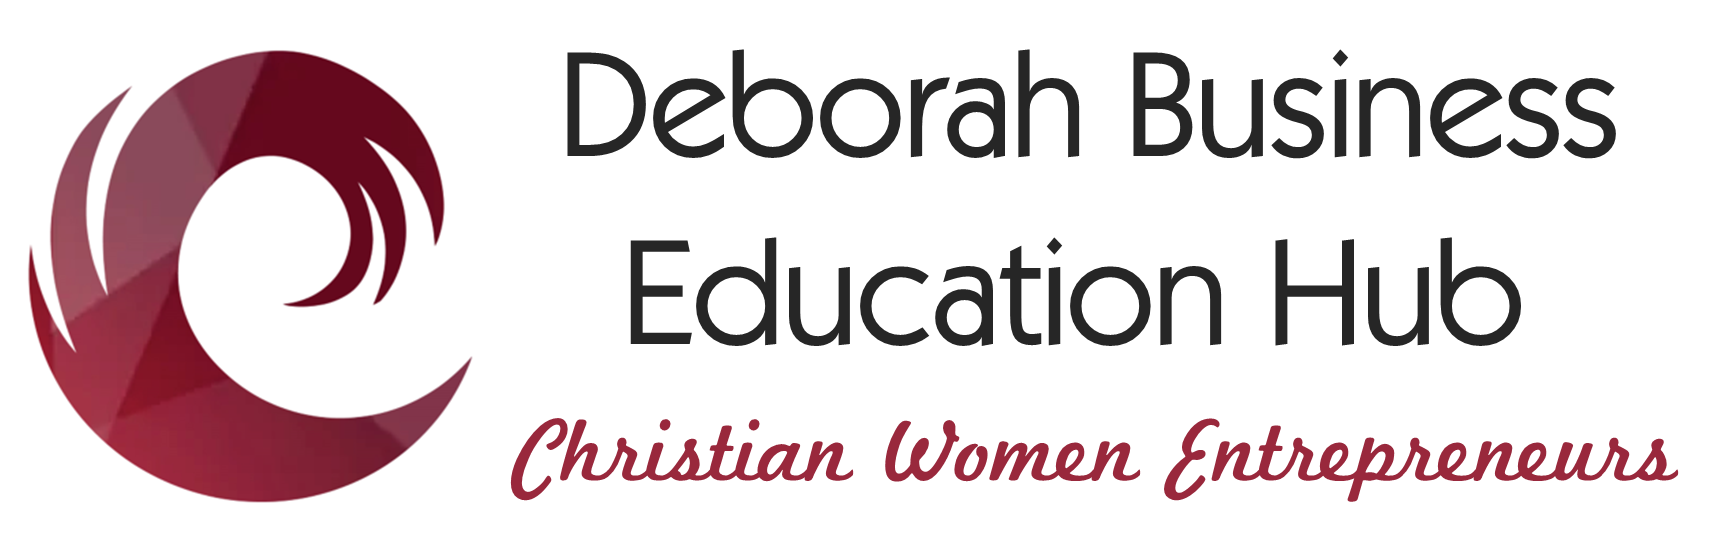 Deborah Business Education Hub 